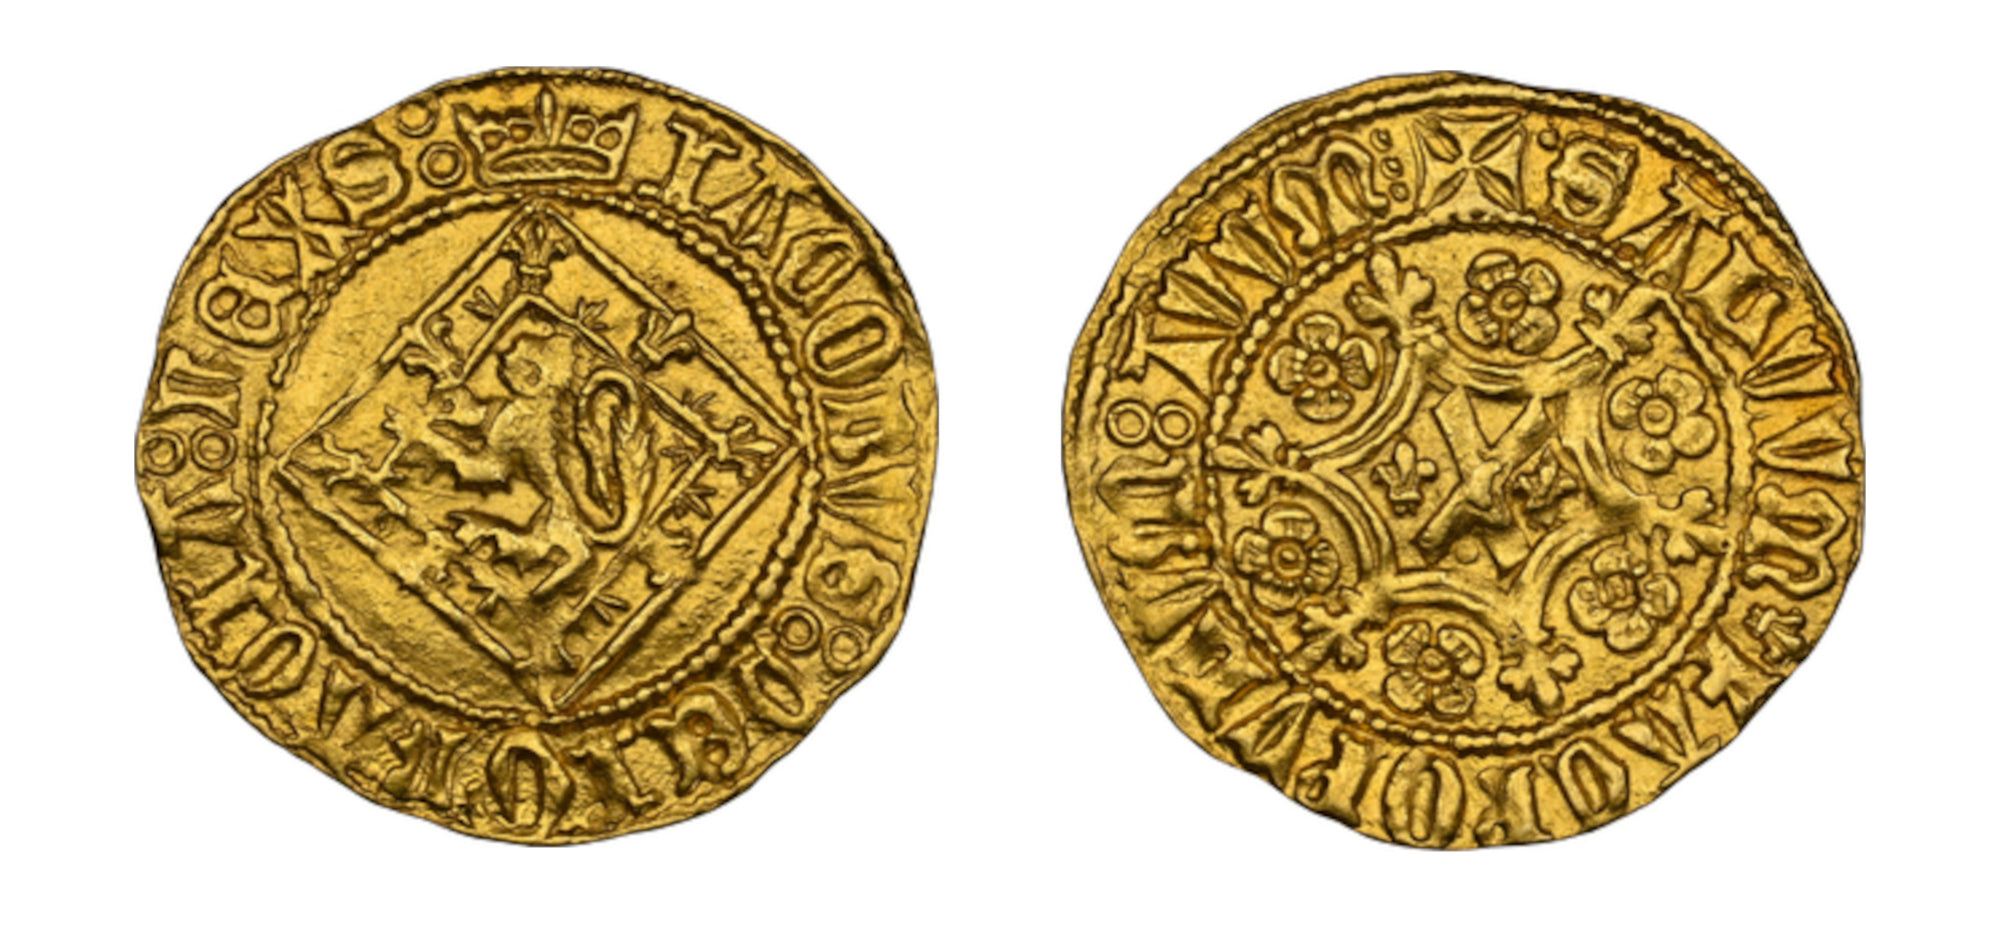 1406-1437 Gold Demy King James I NGC MS62 - Hard Asset Management, Inc